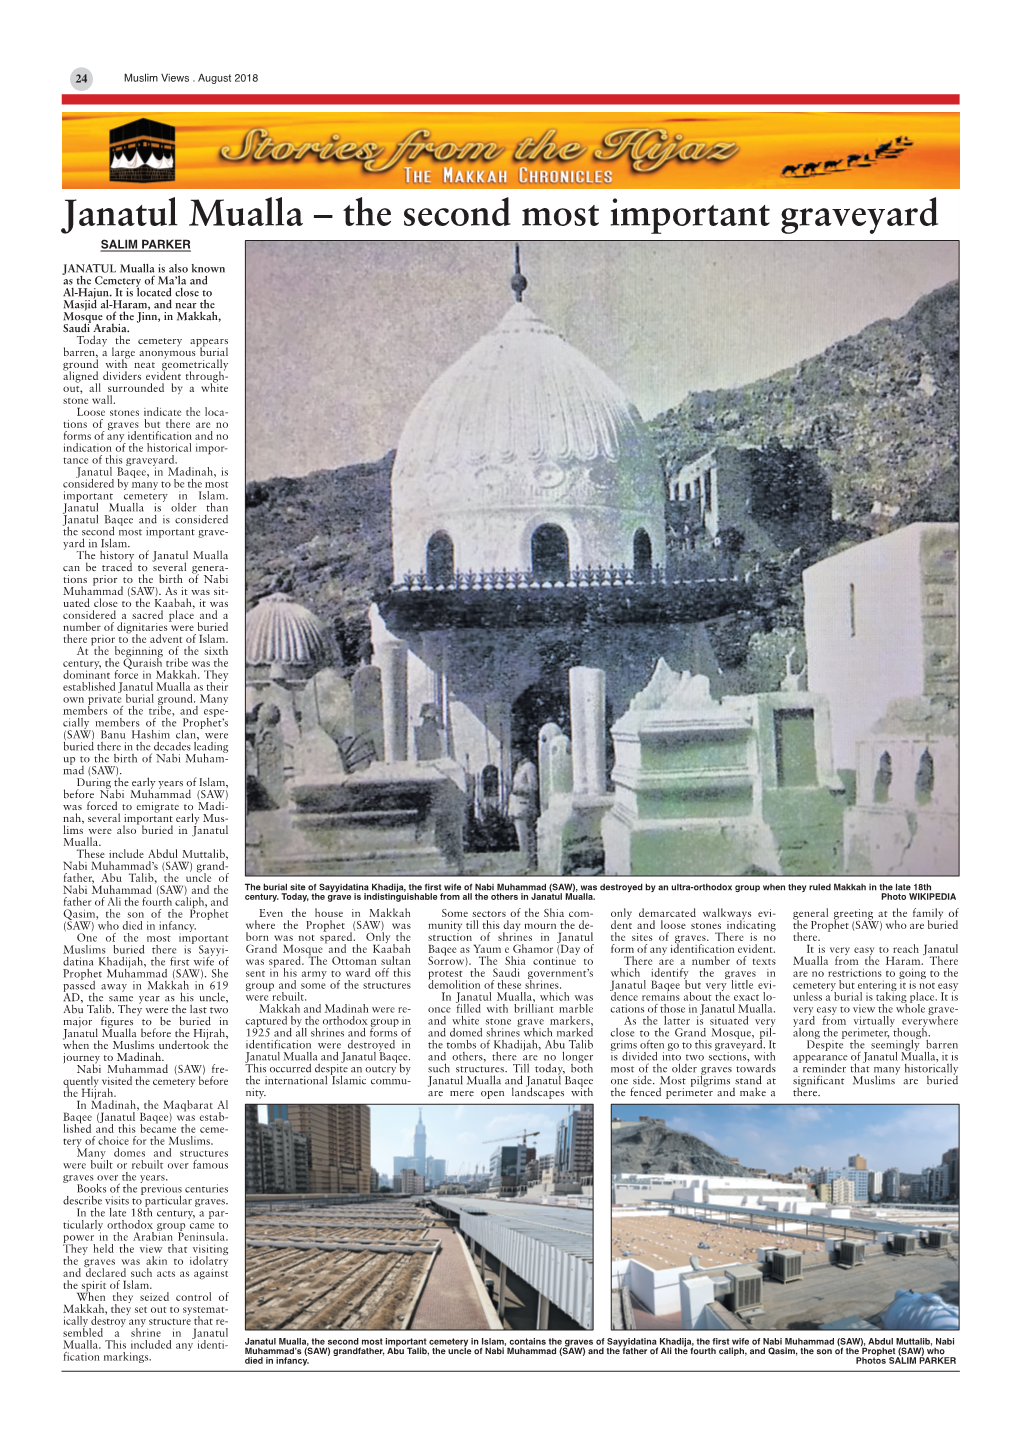 Janatul Mualla – the Second Most Important Graveyard...August 2018